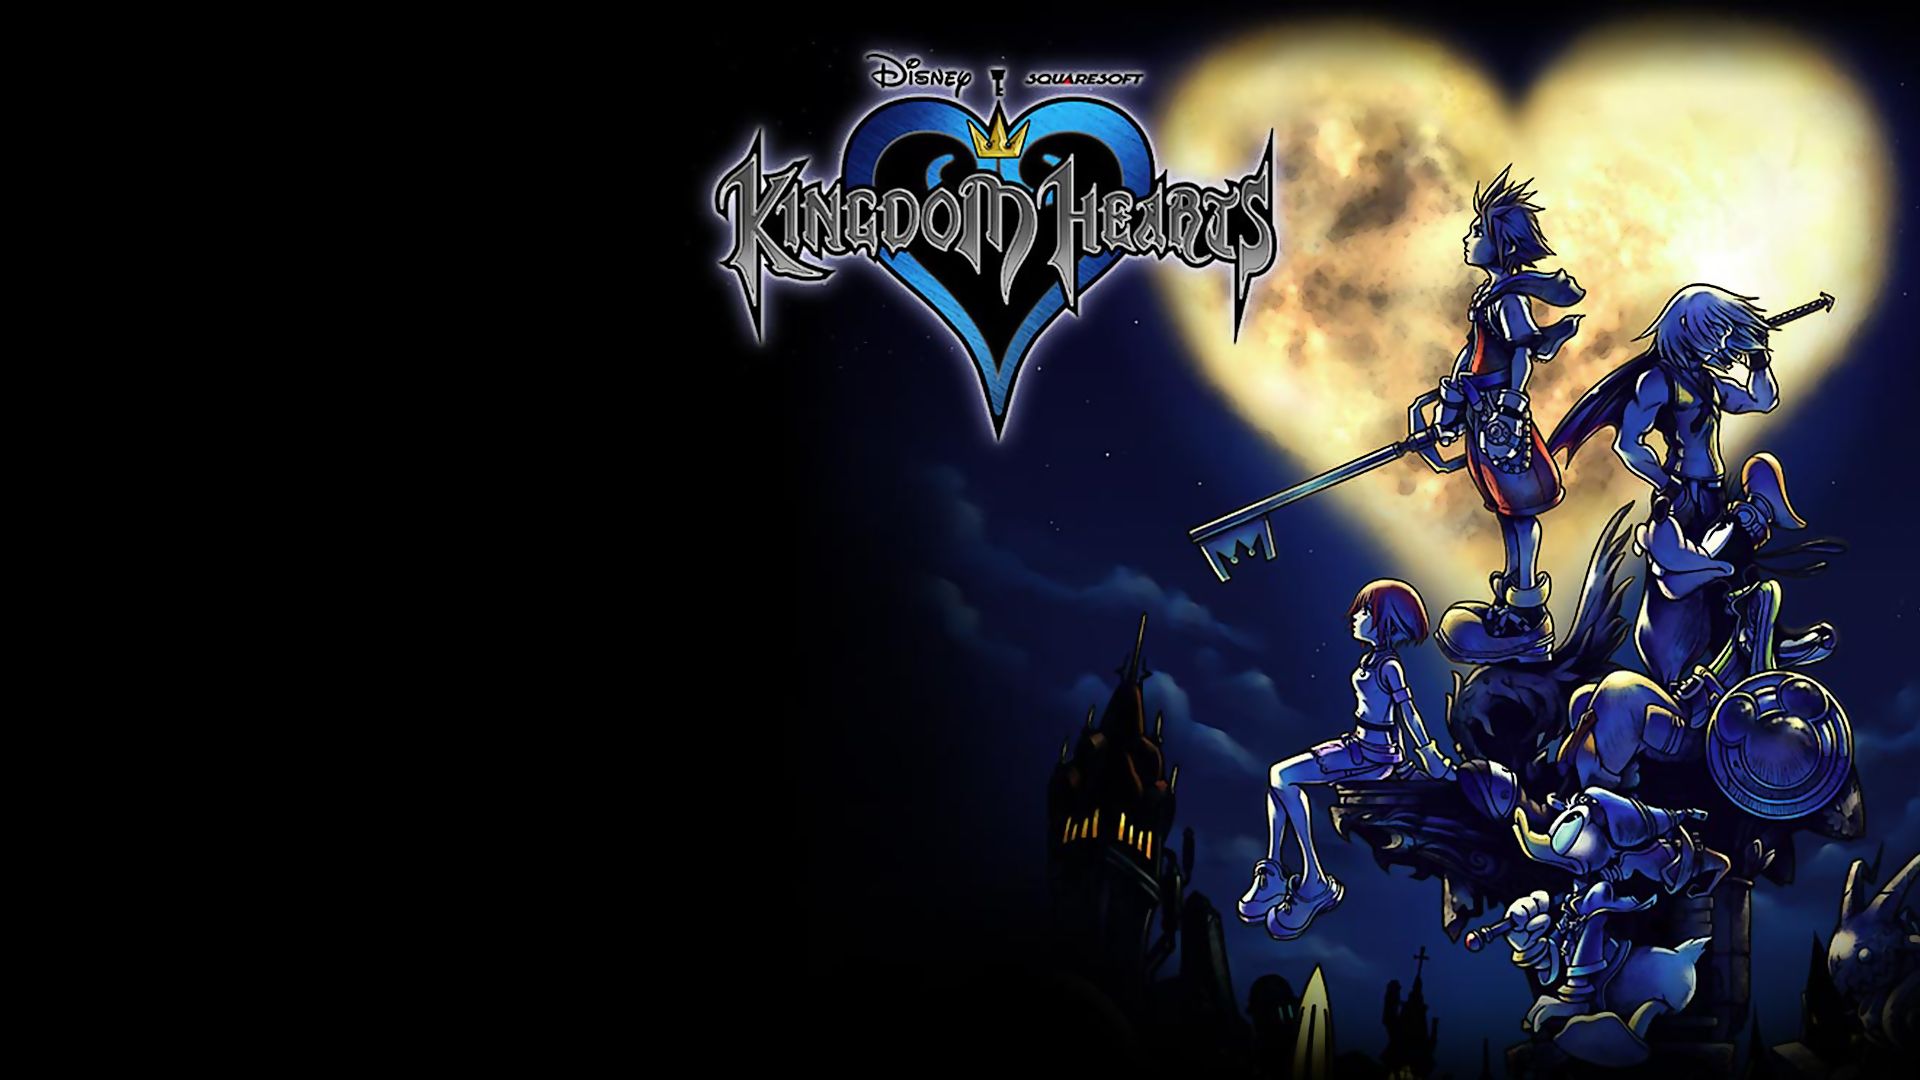 Kingdom Hearts Wallpaper Hd - All Wallpapers New